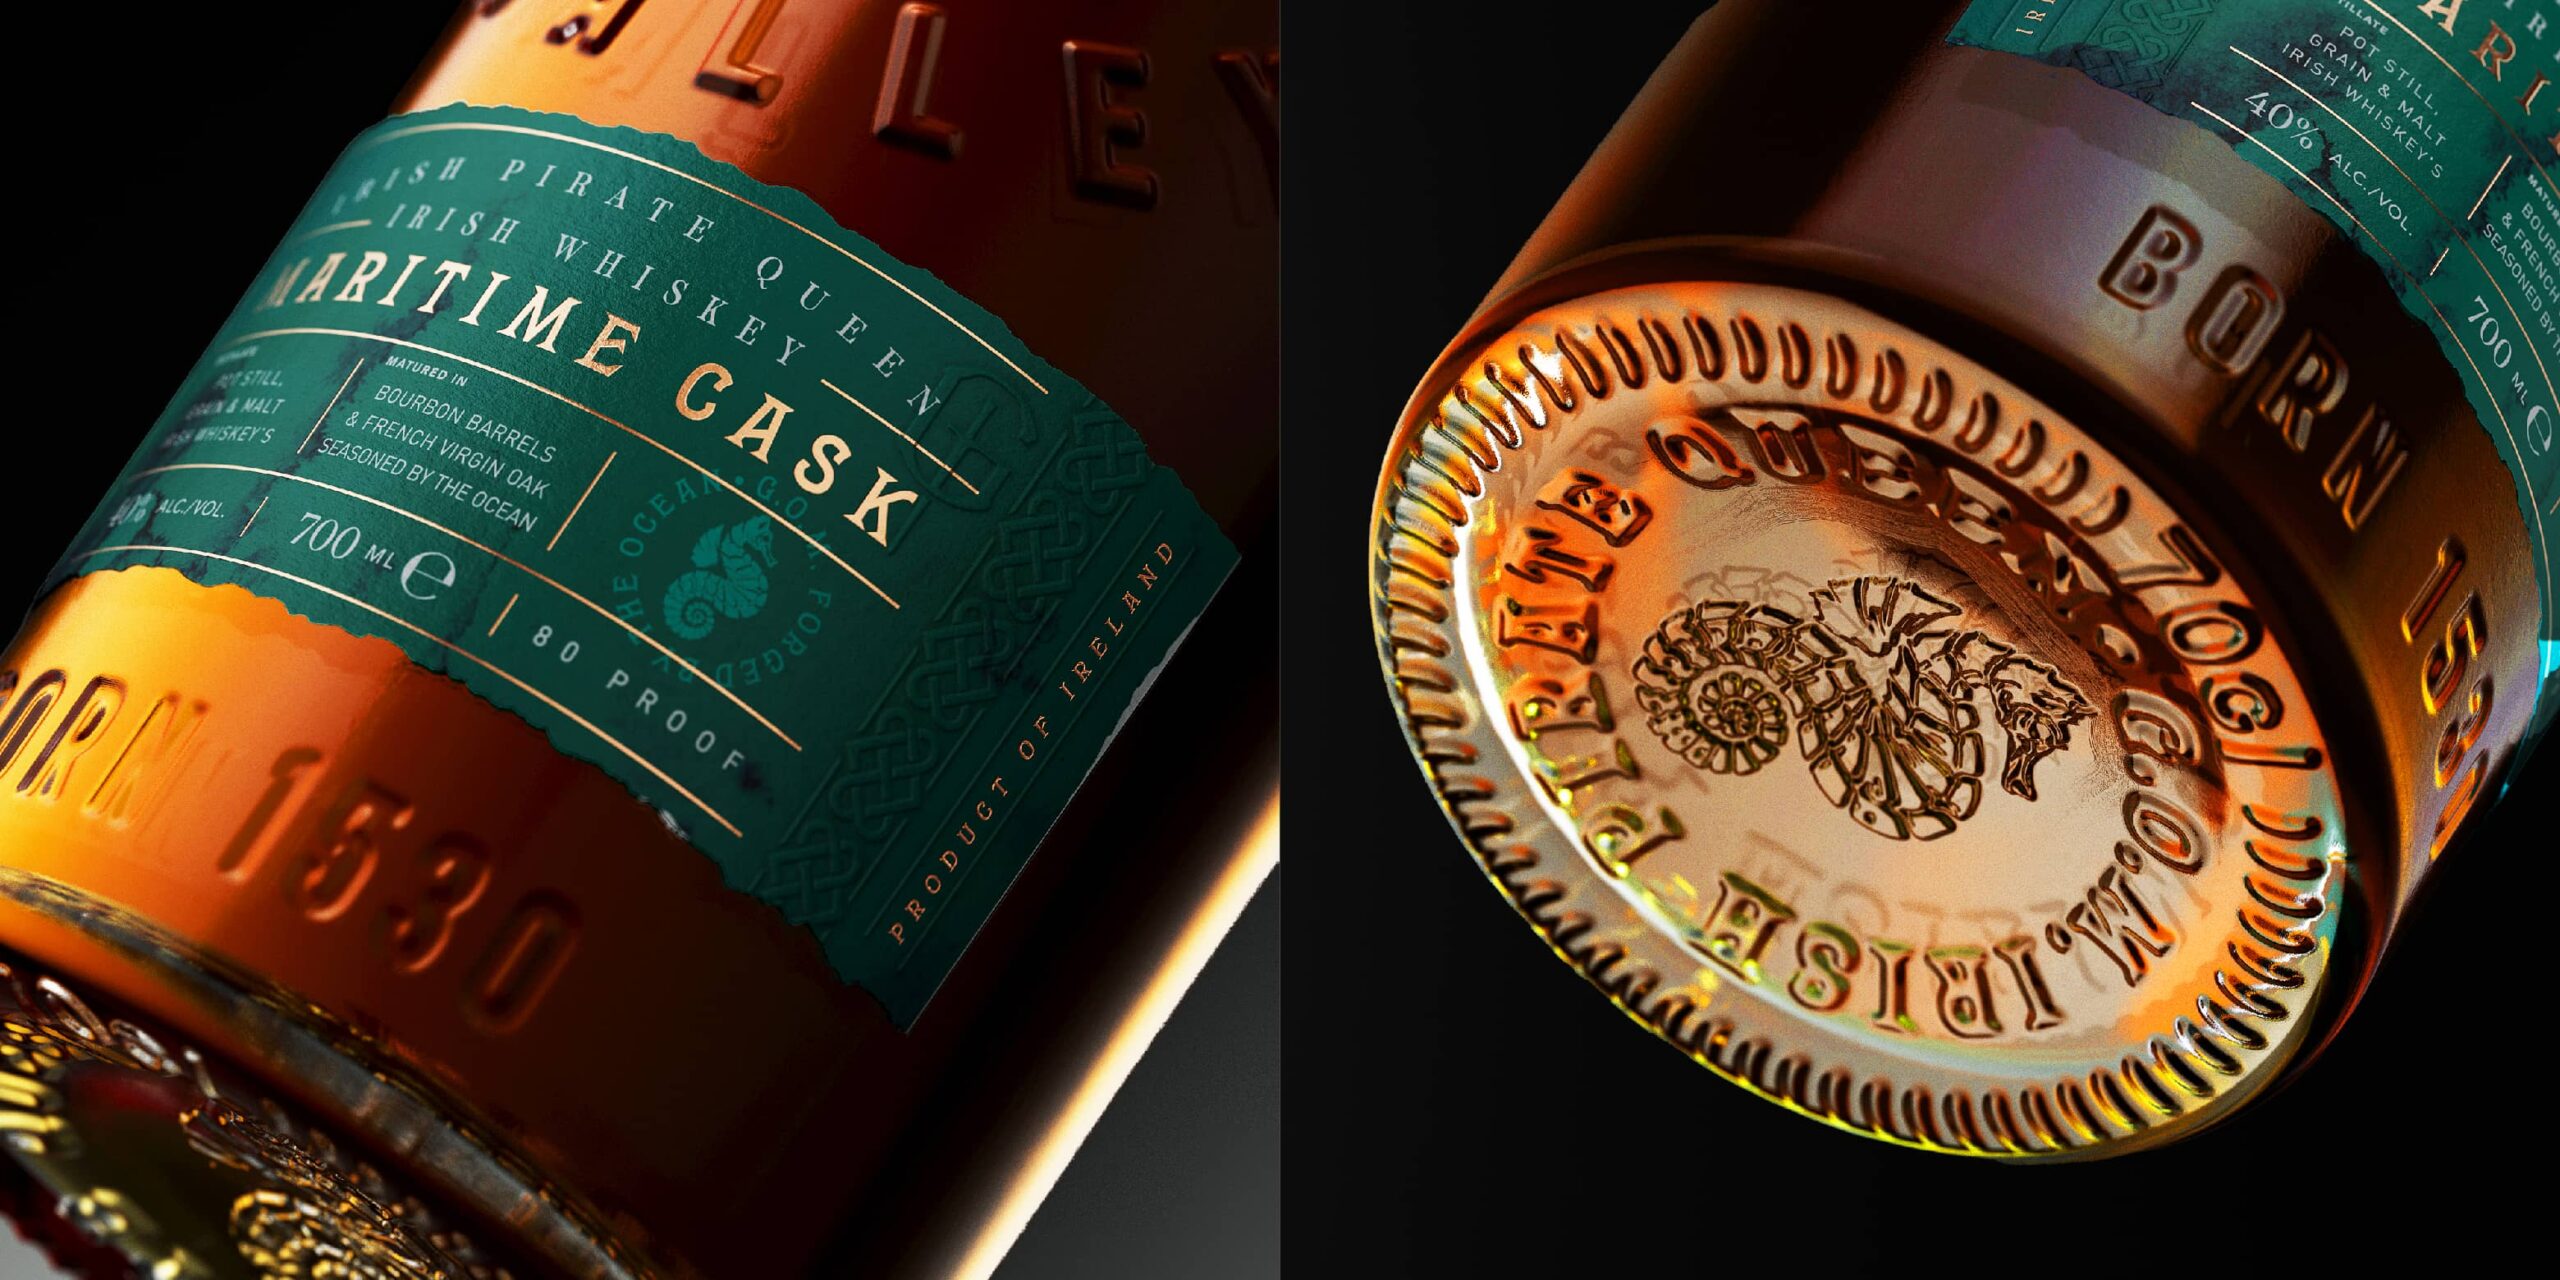 Grace O'Malley Whiskey: A Blend of Premium Taste and Legendary Irish Storytelling in Packaging Design